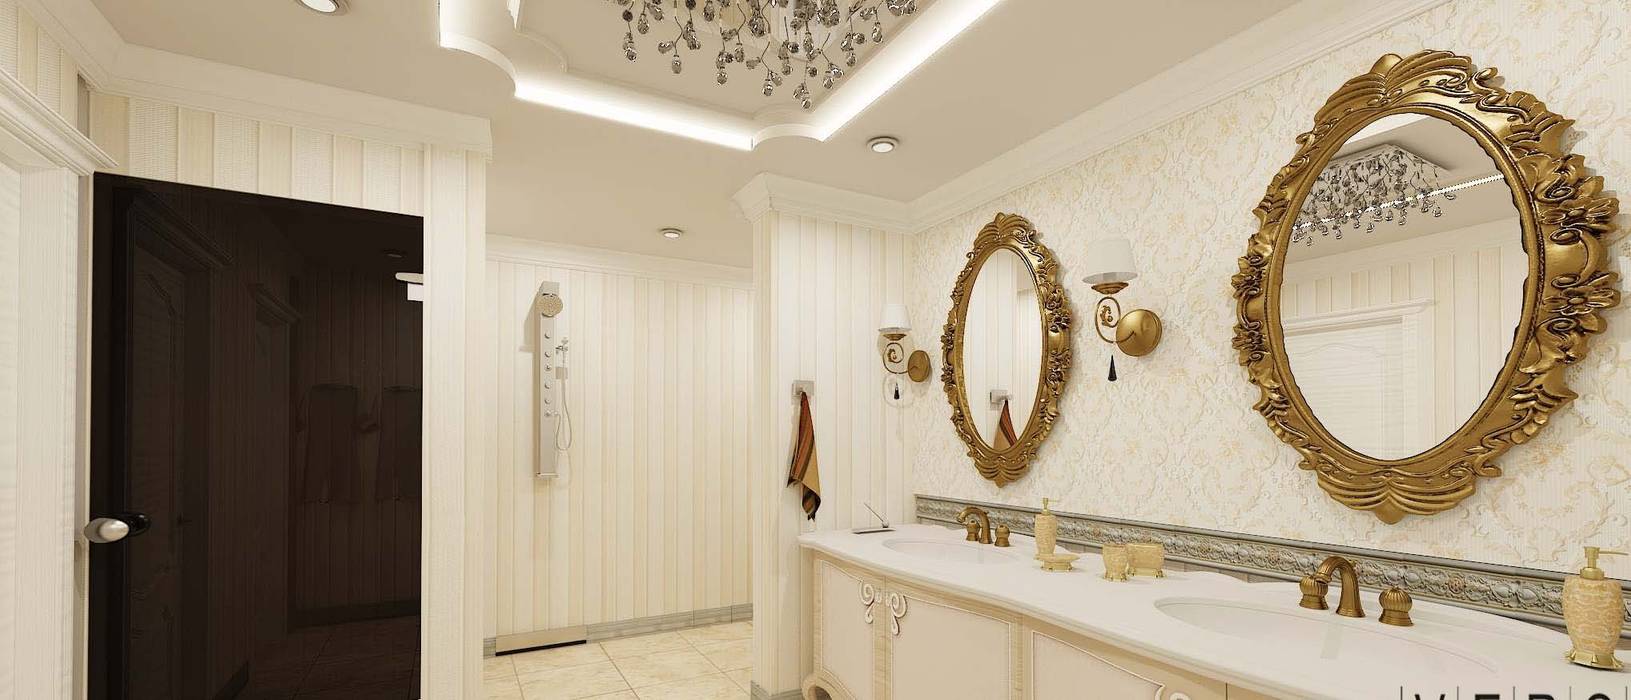 Banyo aydınlatma ANTE MİMARLIK Klasik Banyo iç mekan tasarım,klasık,banyo tasarım,banyo aydınlatma